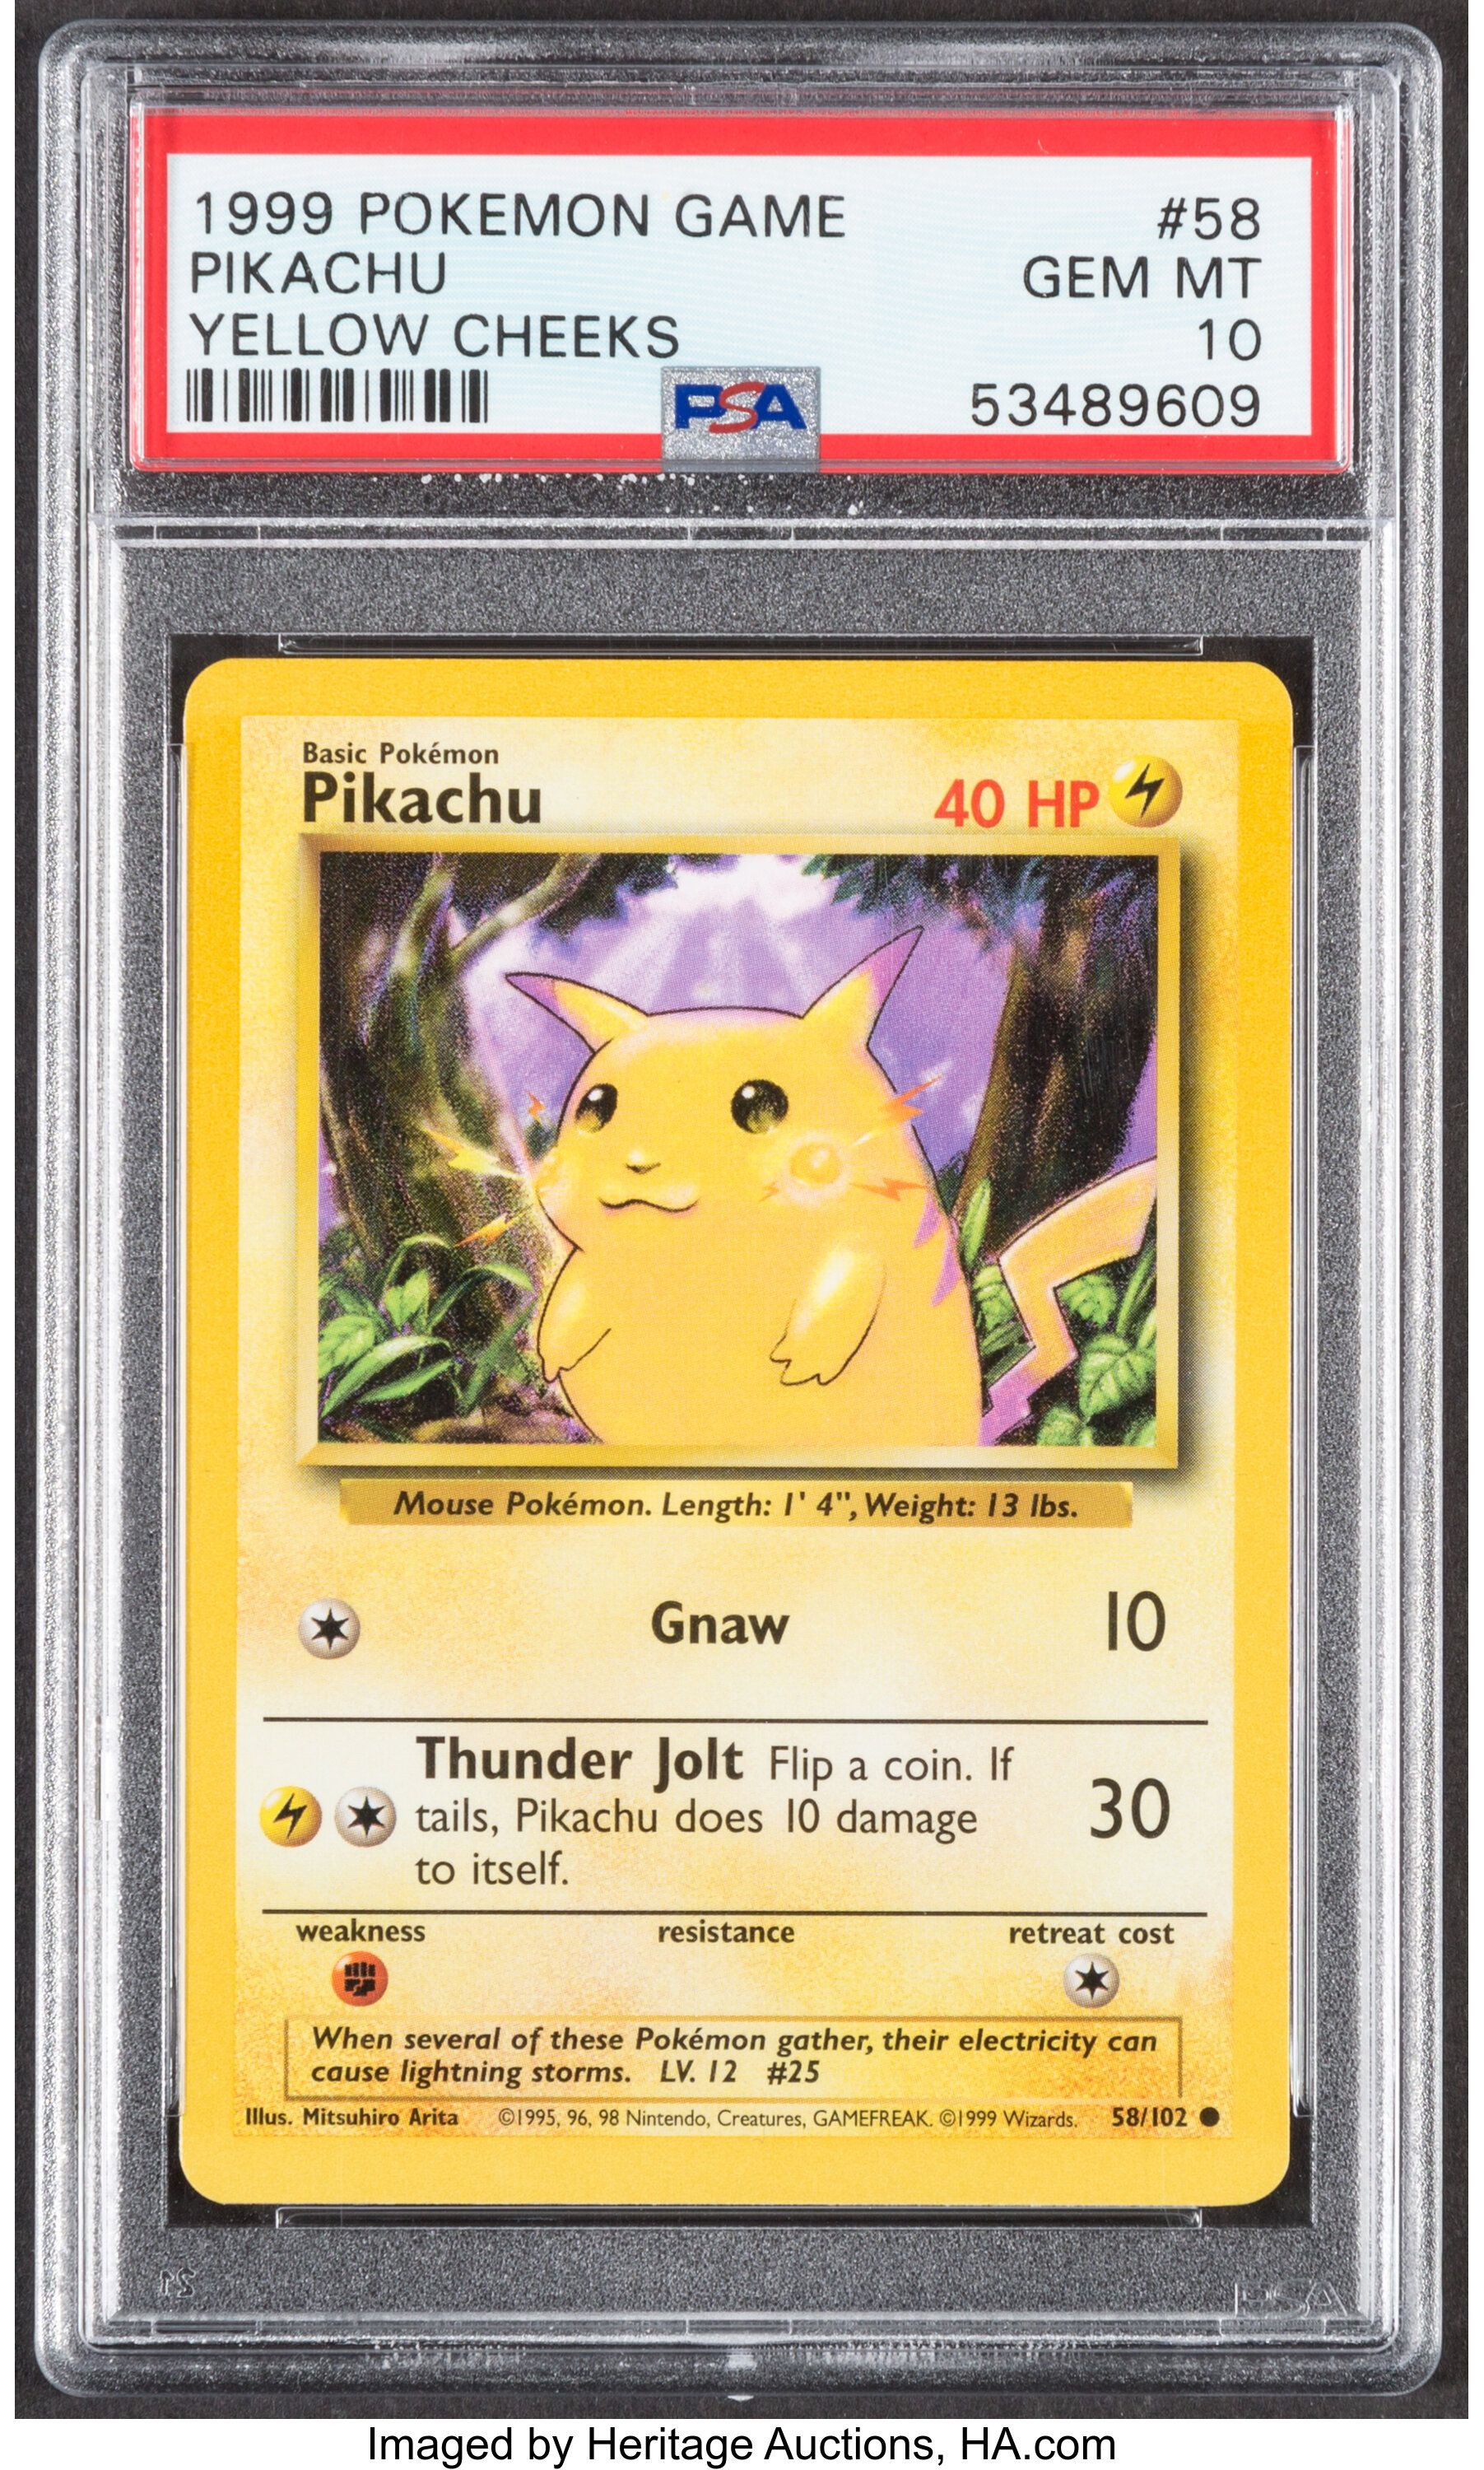 Rare Pikachu Pokémon Trading Card Sells Big at Auction